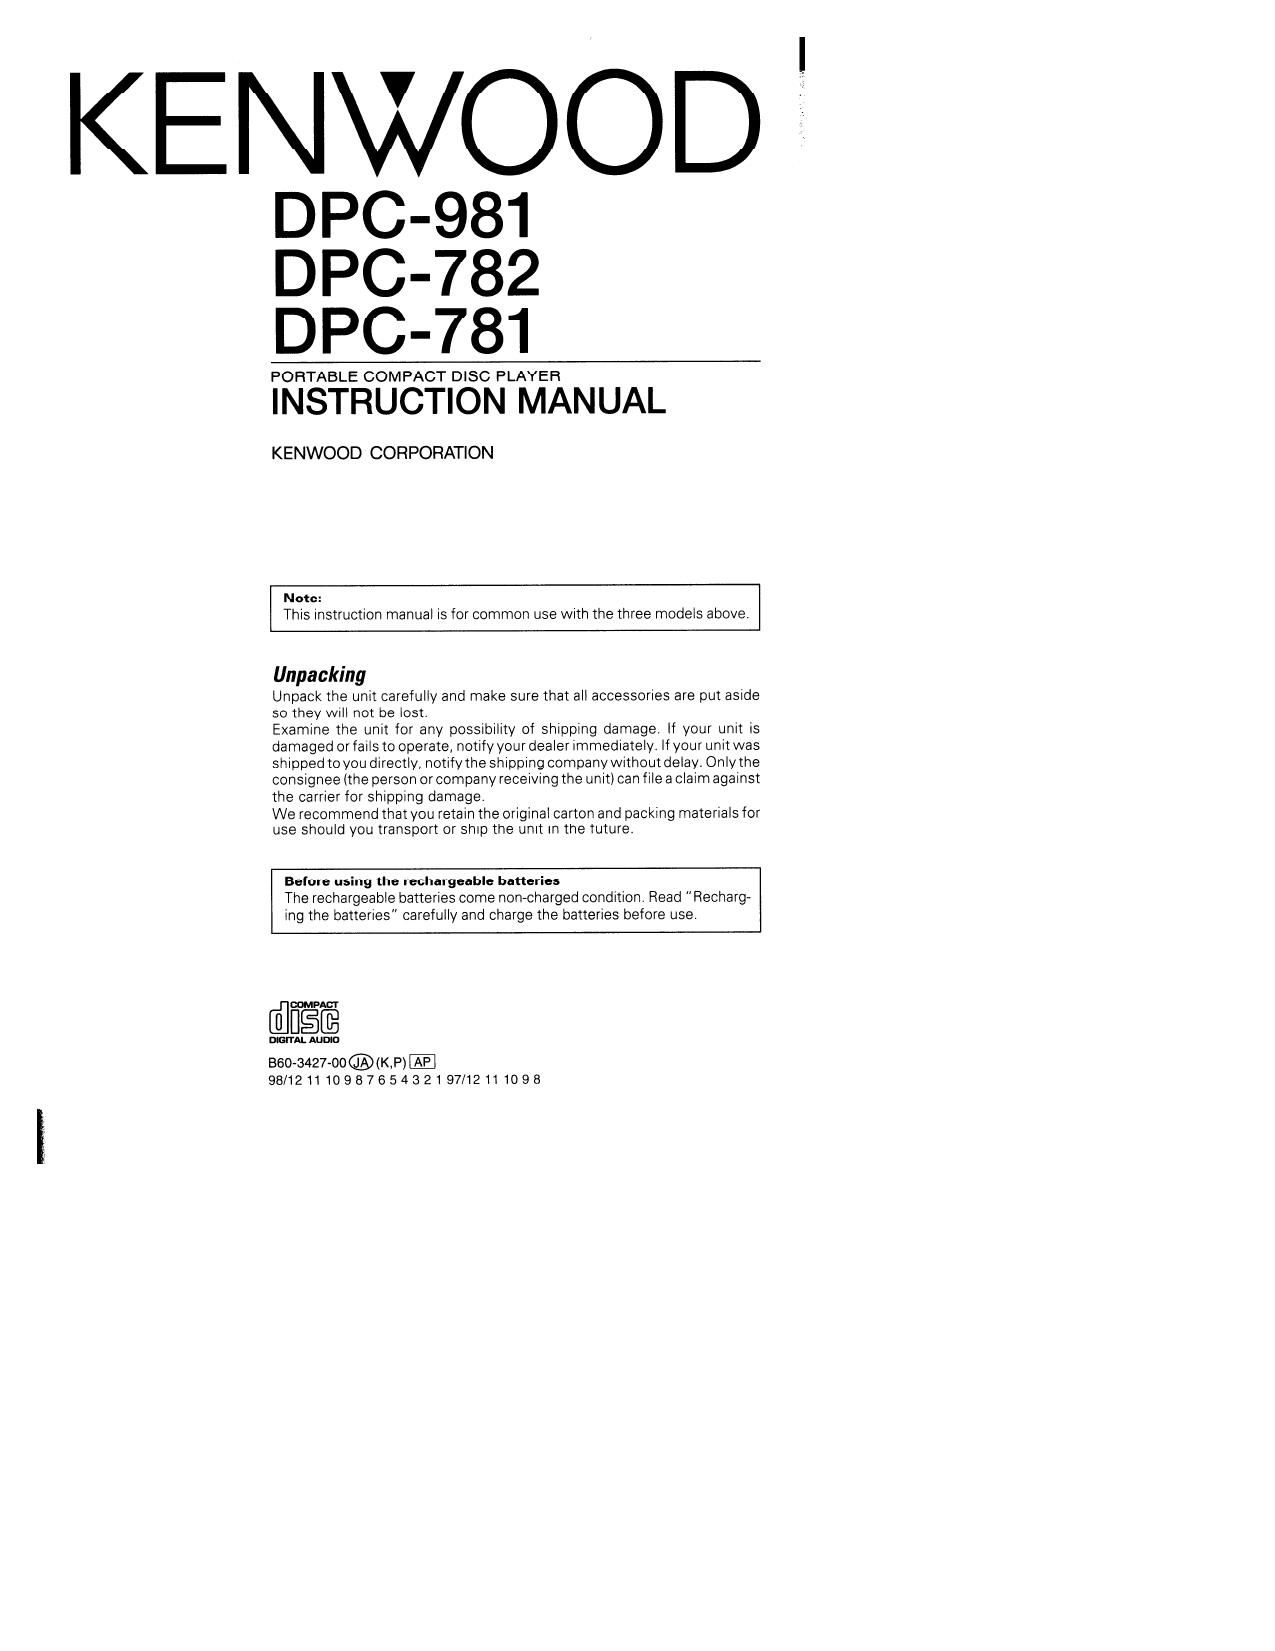 Kenwood DPC 981 Owners Manual